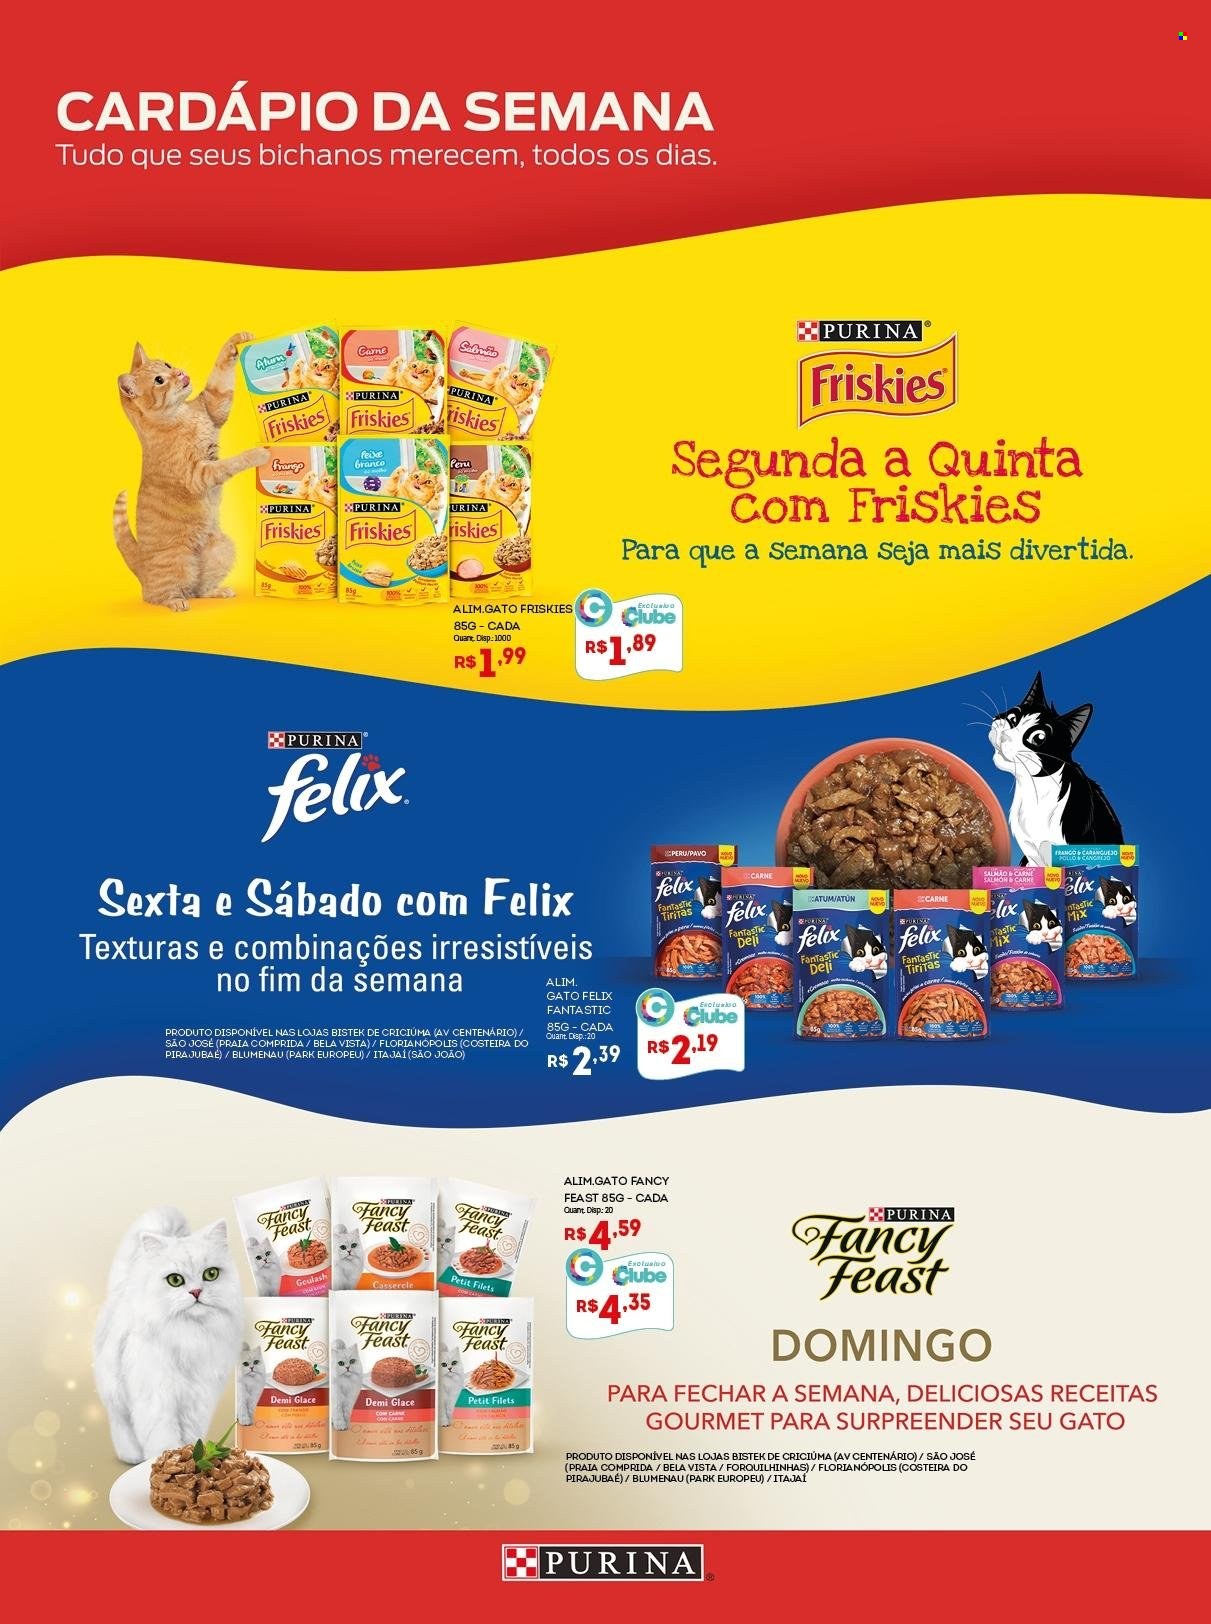 Encarte Bistek Supermercados  - 13.10.2021 - 26.10.2021.